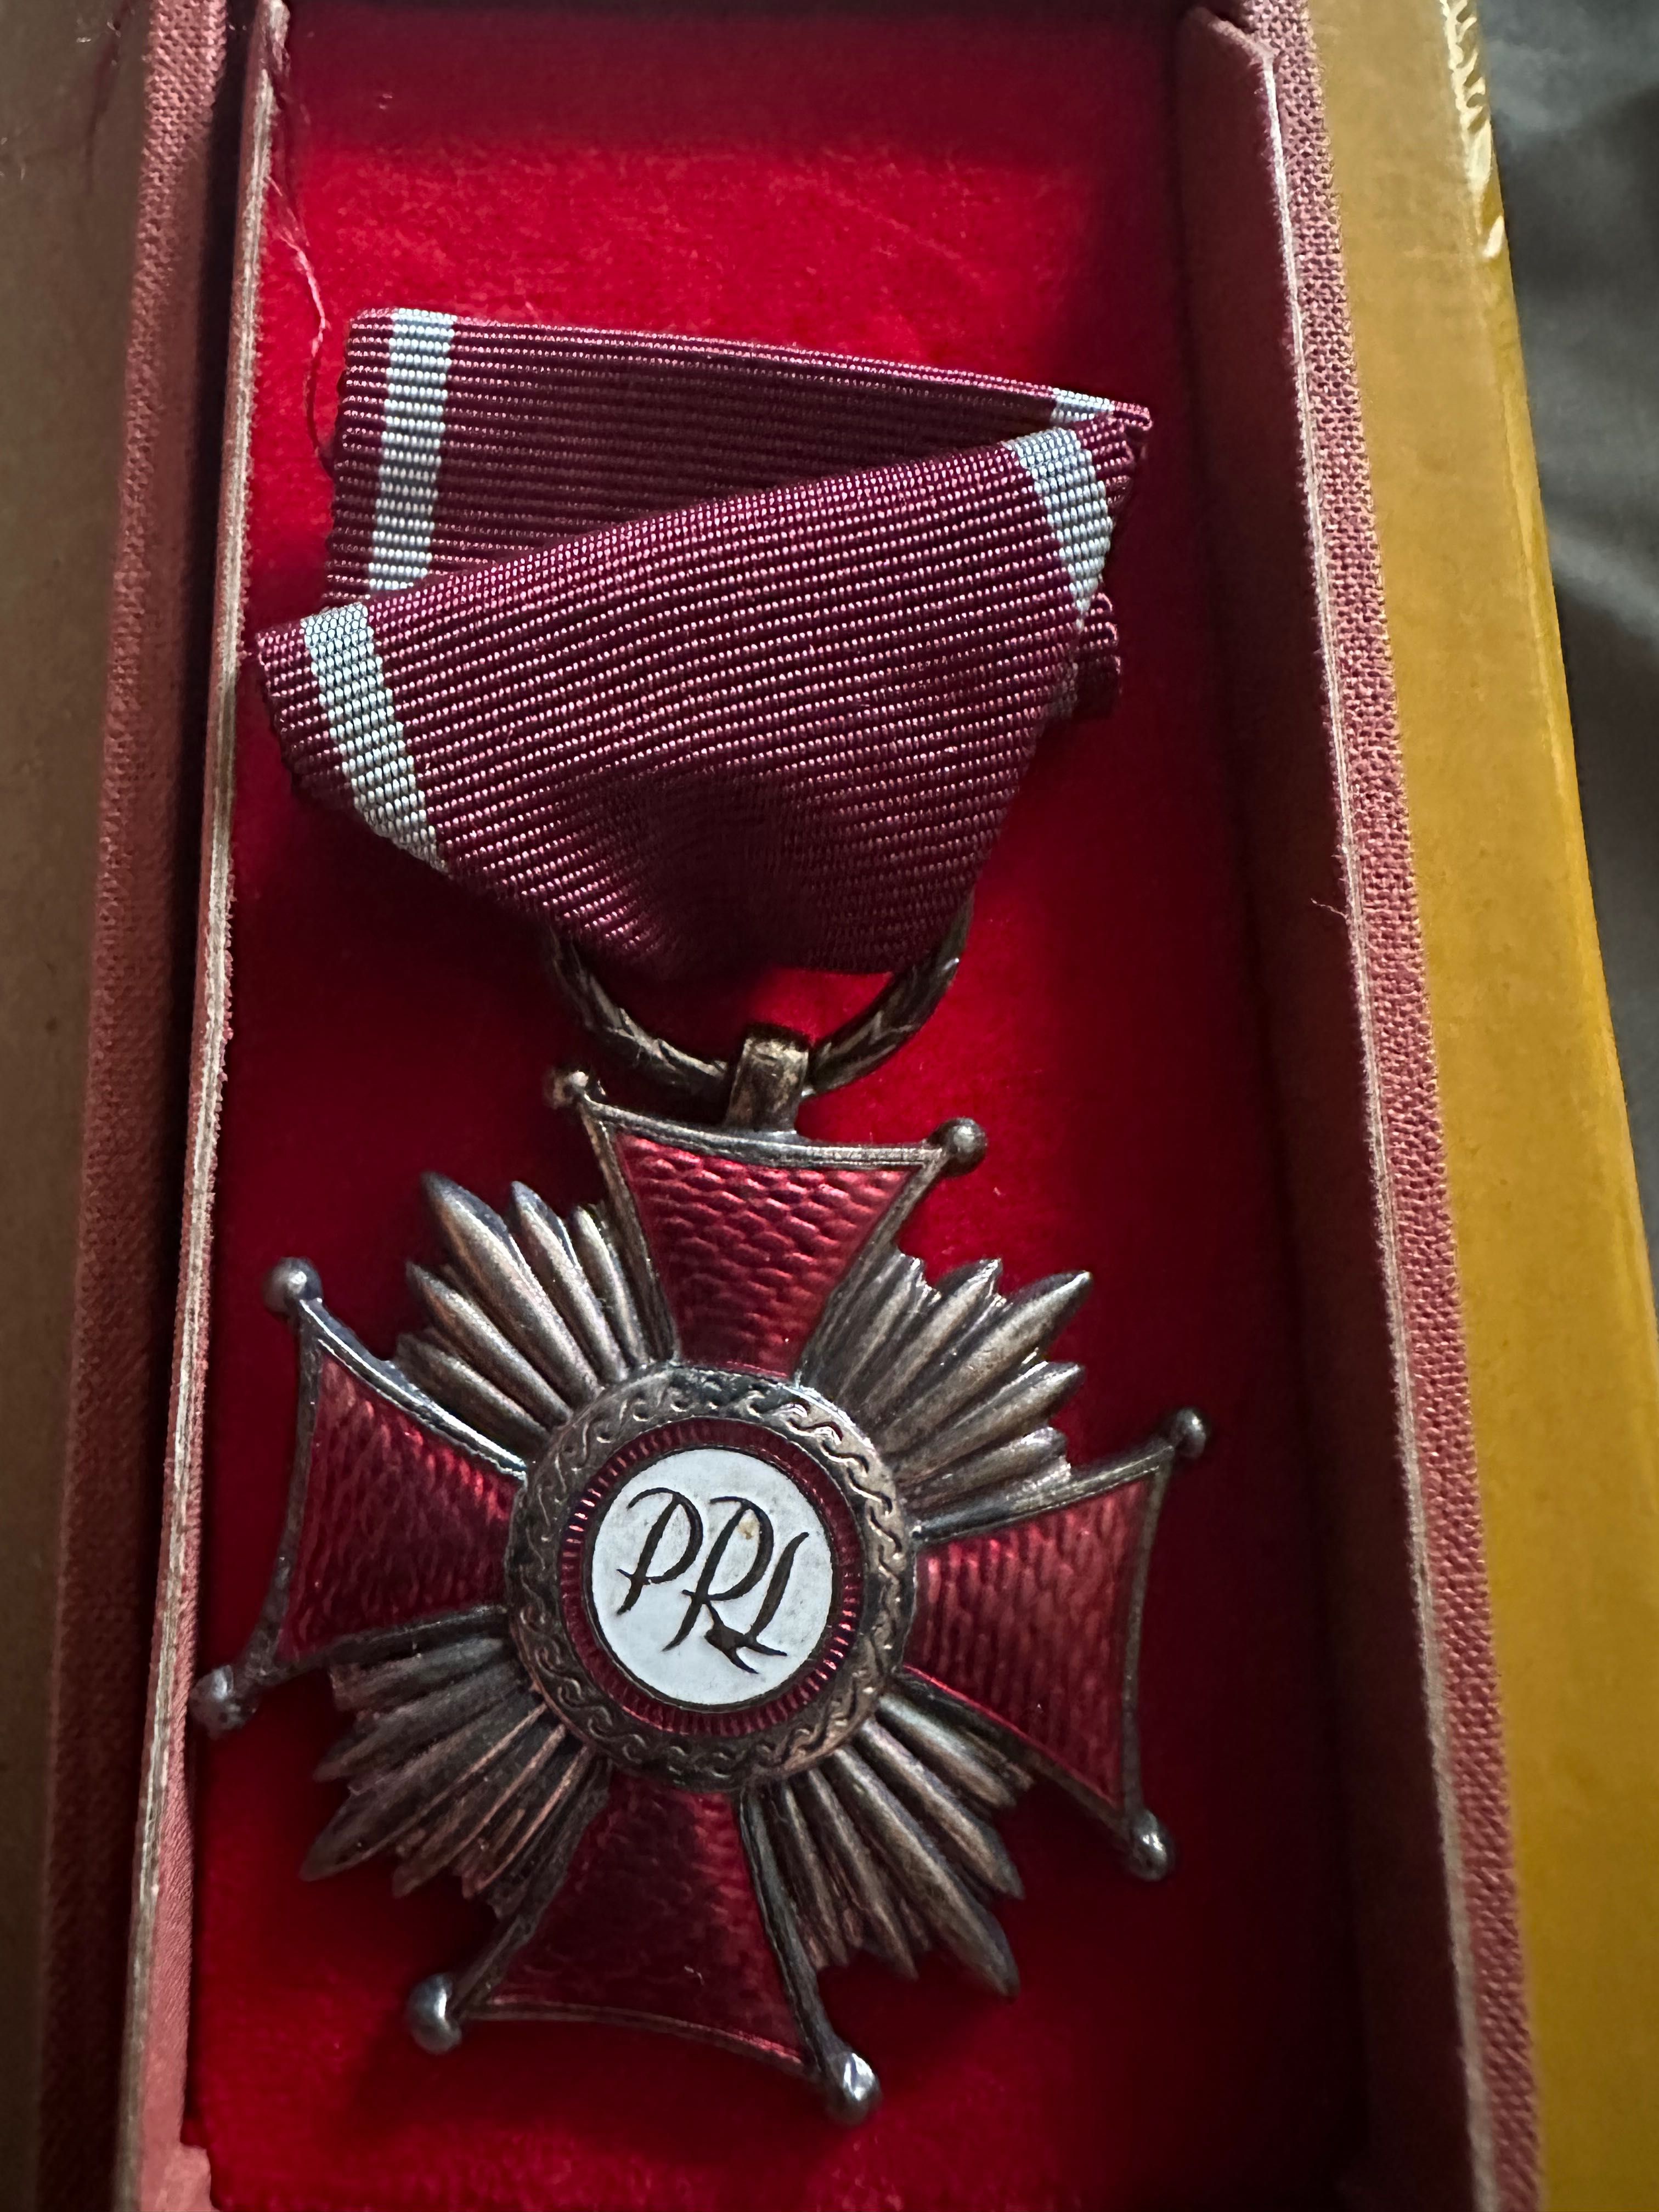 Stary medal PRL w pudełku